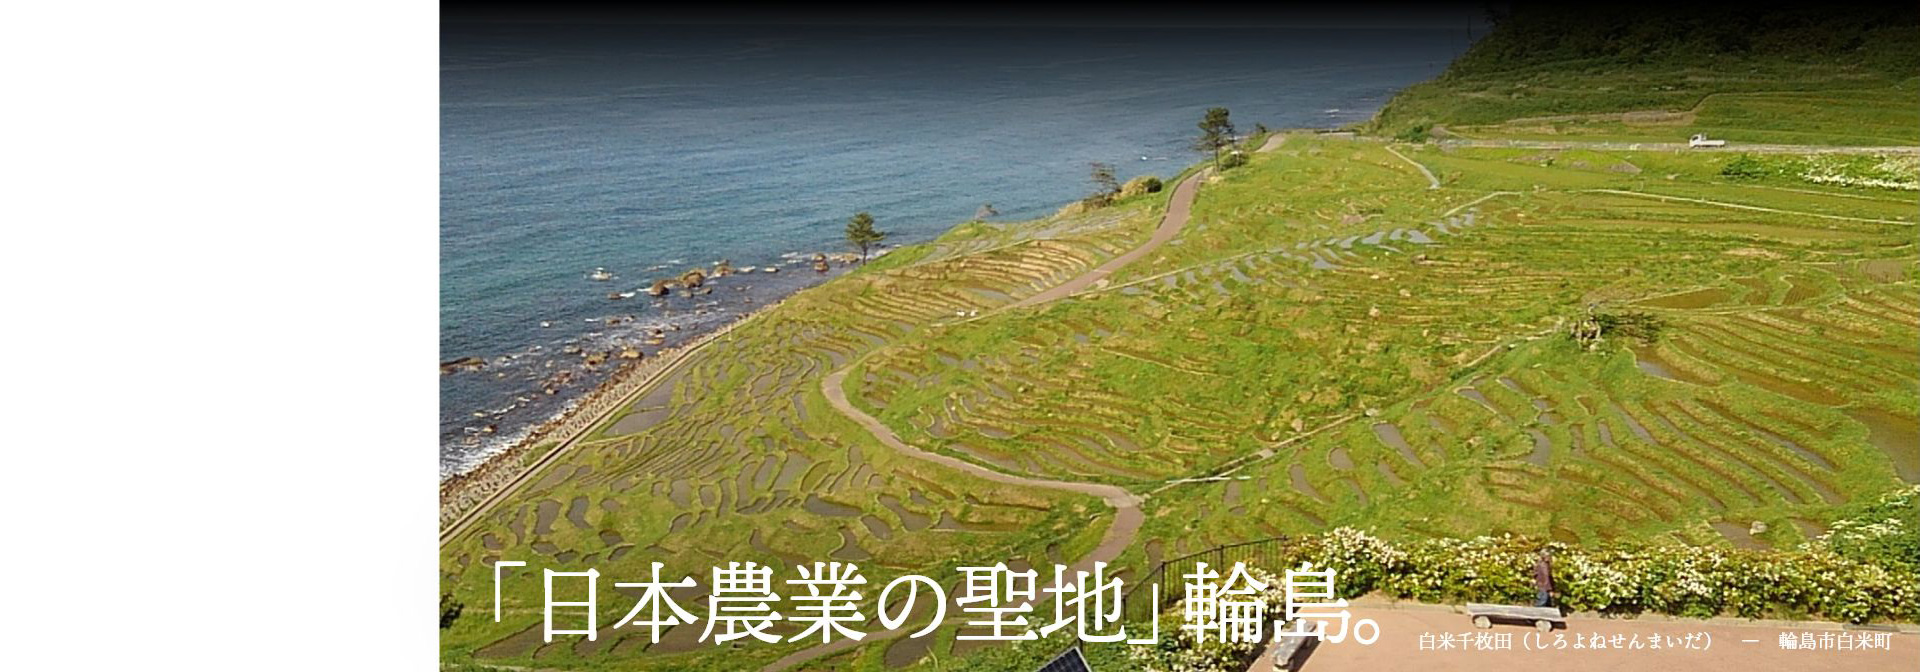 「日本農業の聖地」輪島。